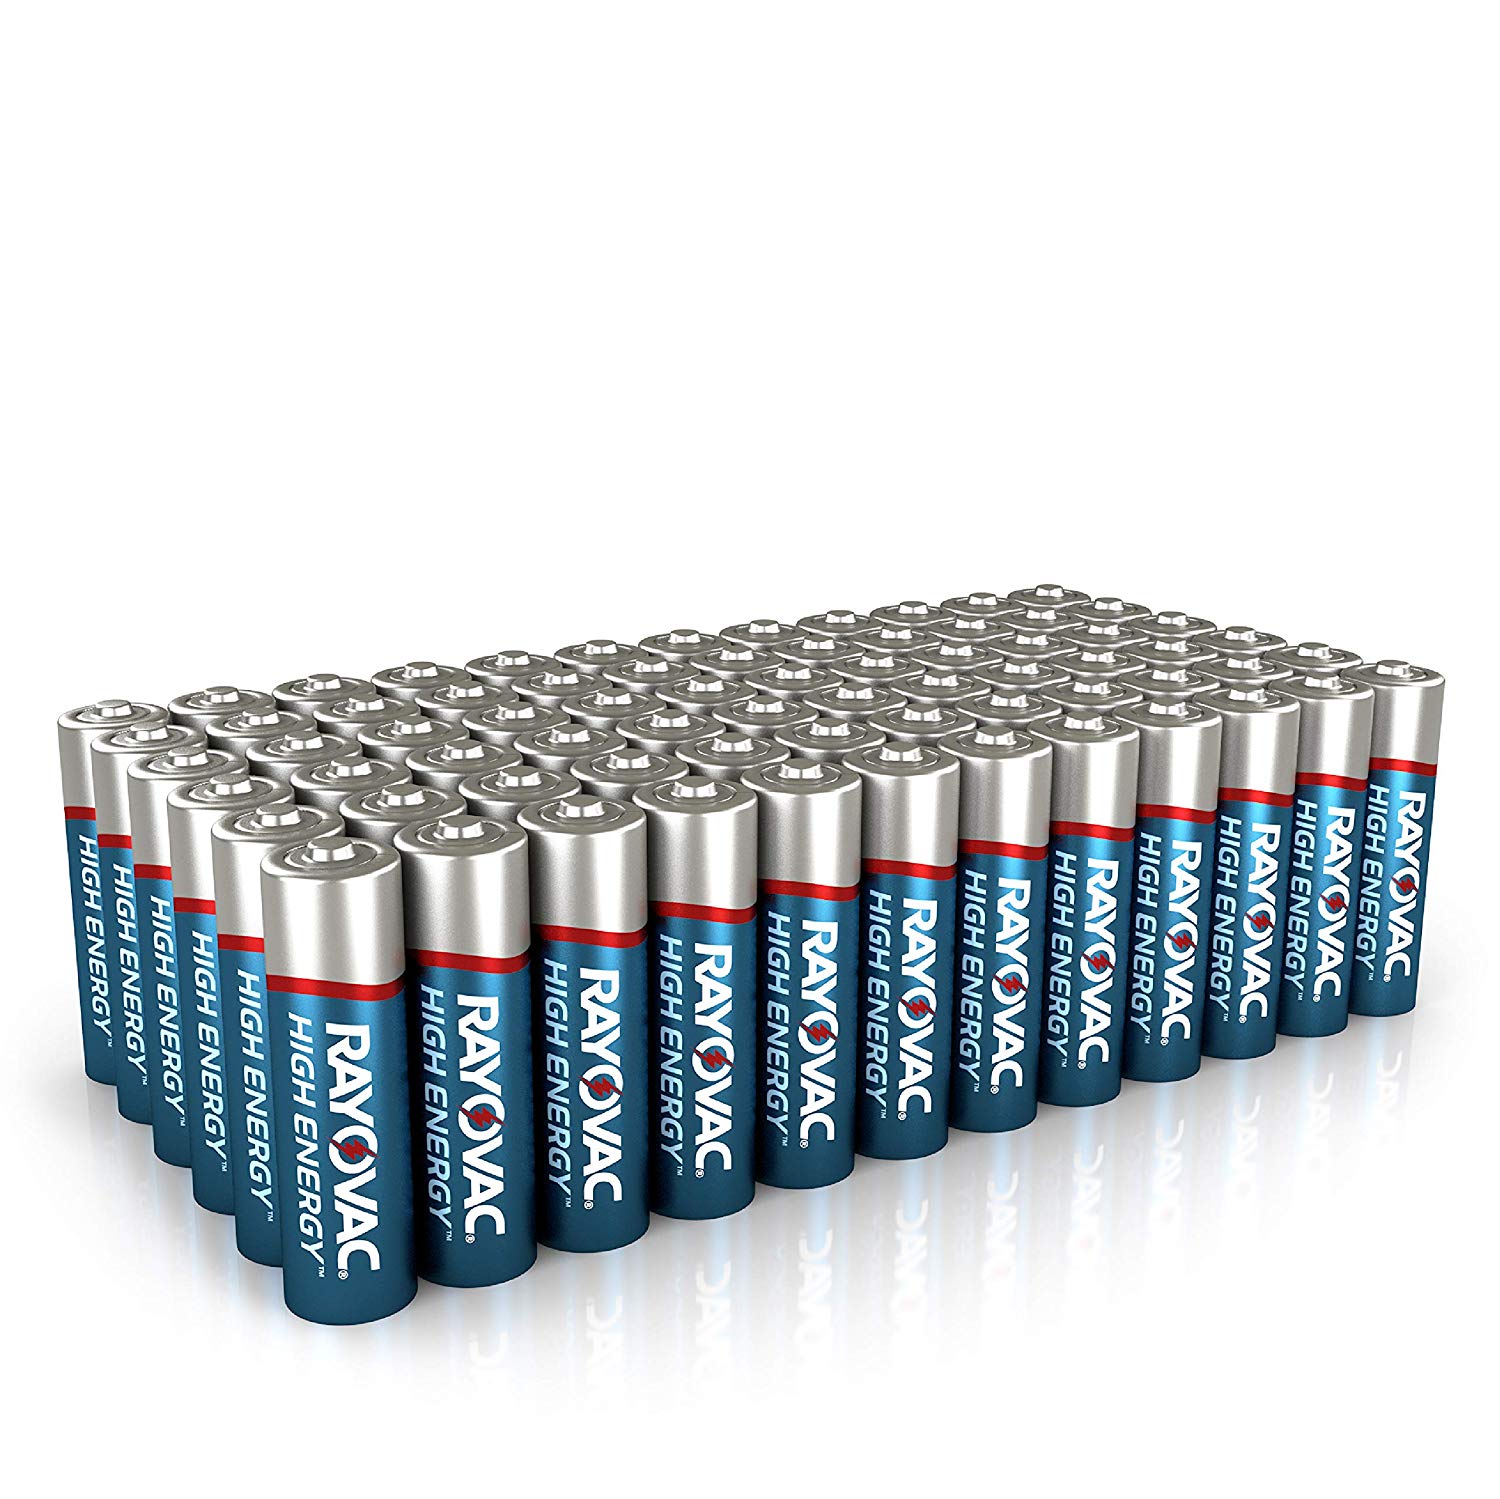 Rayovac AA batteries